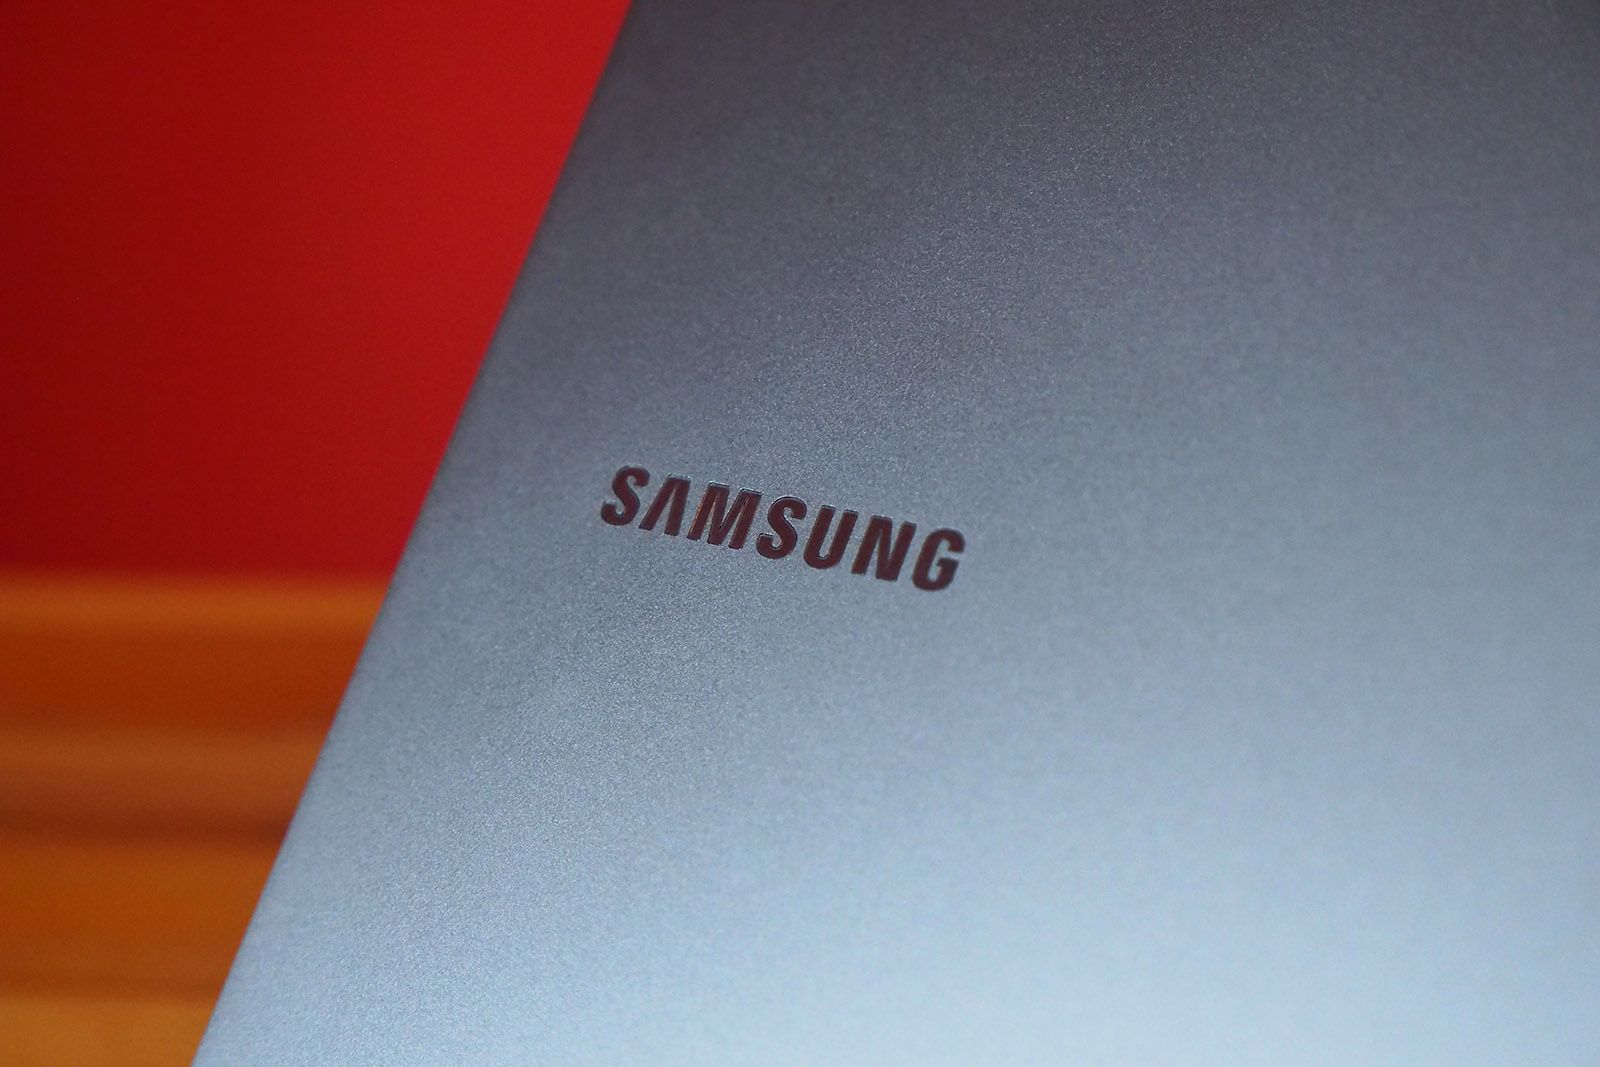 Samsung Galaxy Book S (Intel) review photo 3